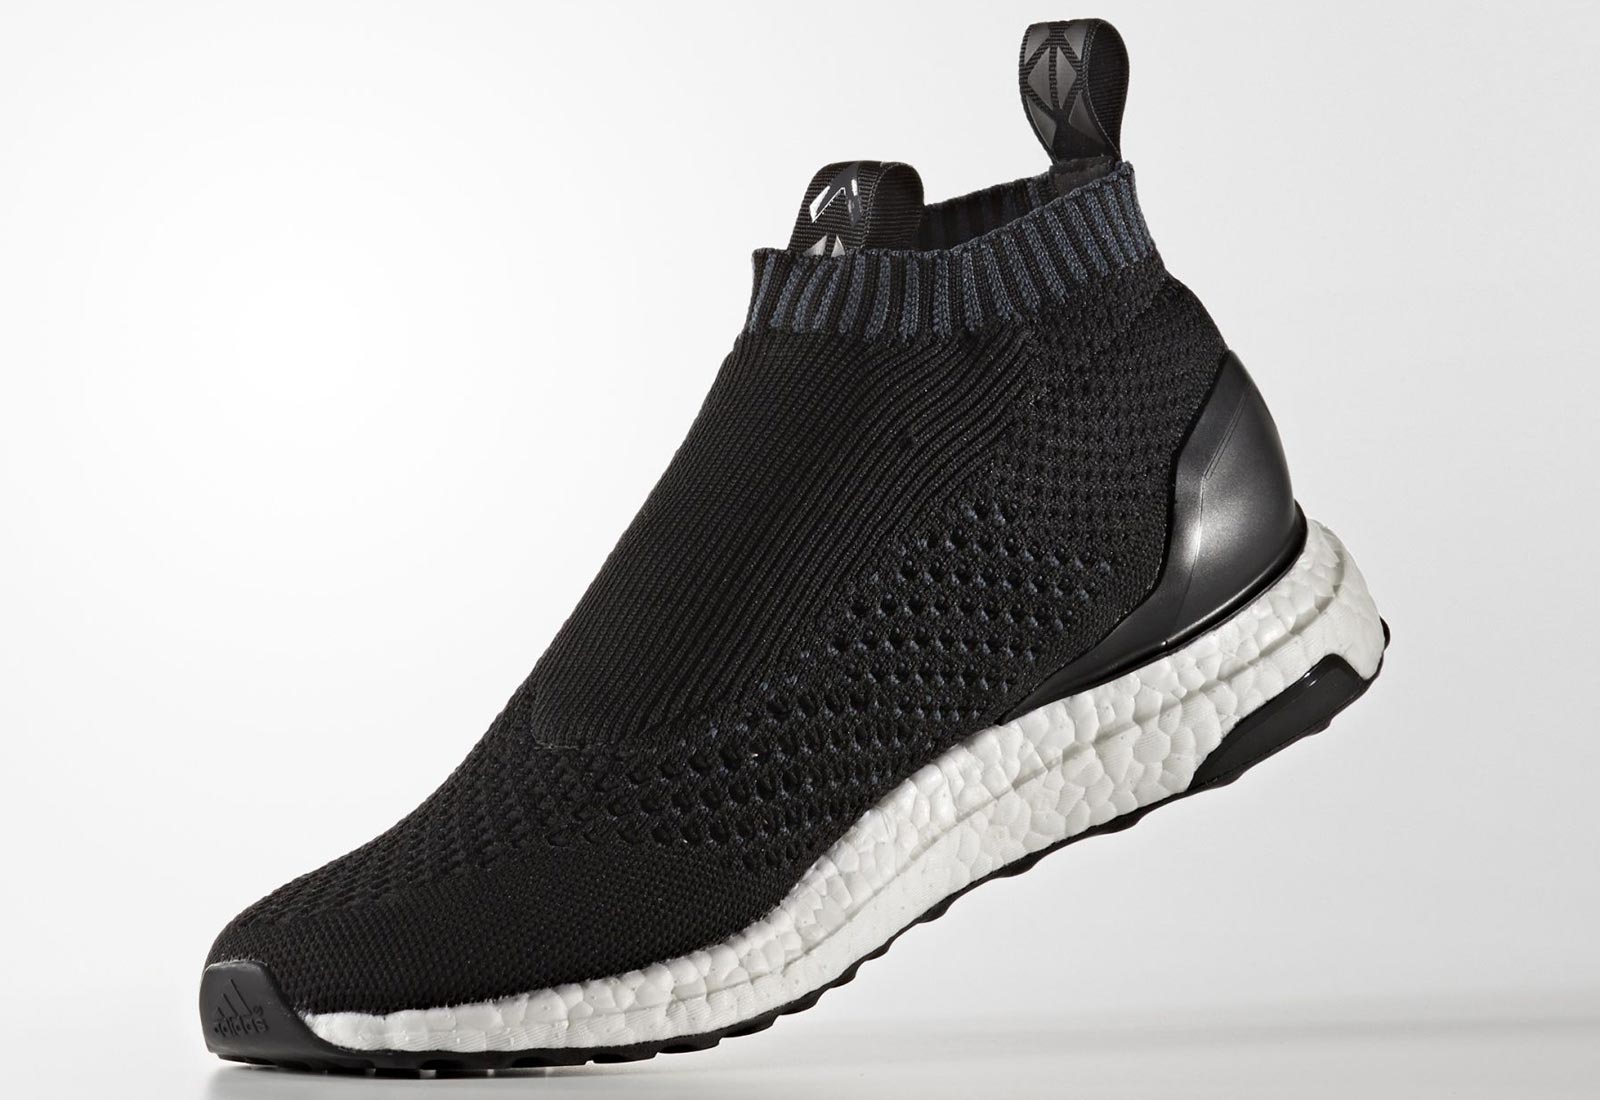 Black Adidas Ace 16+ PureControl UltraBoost Released - Footy Headlines